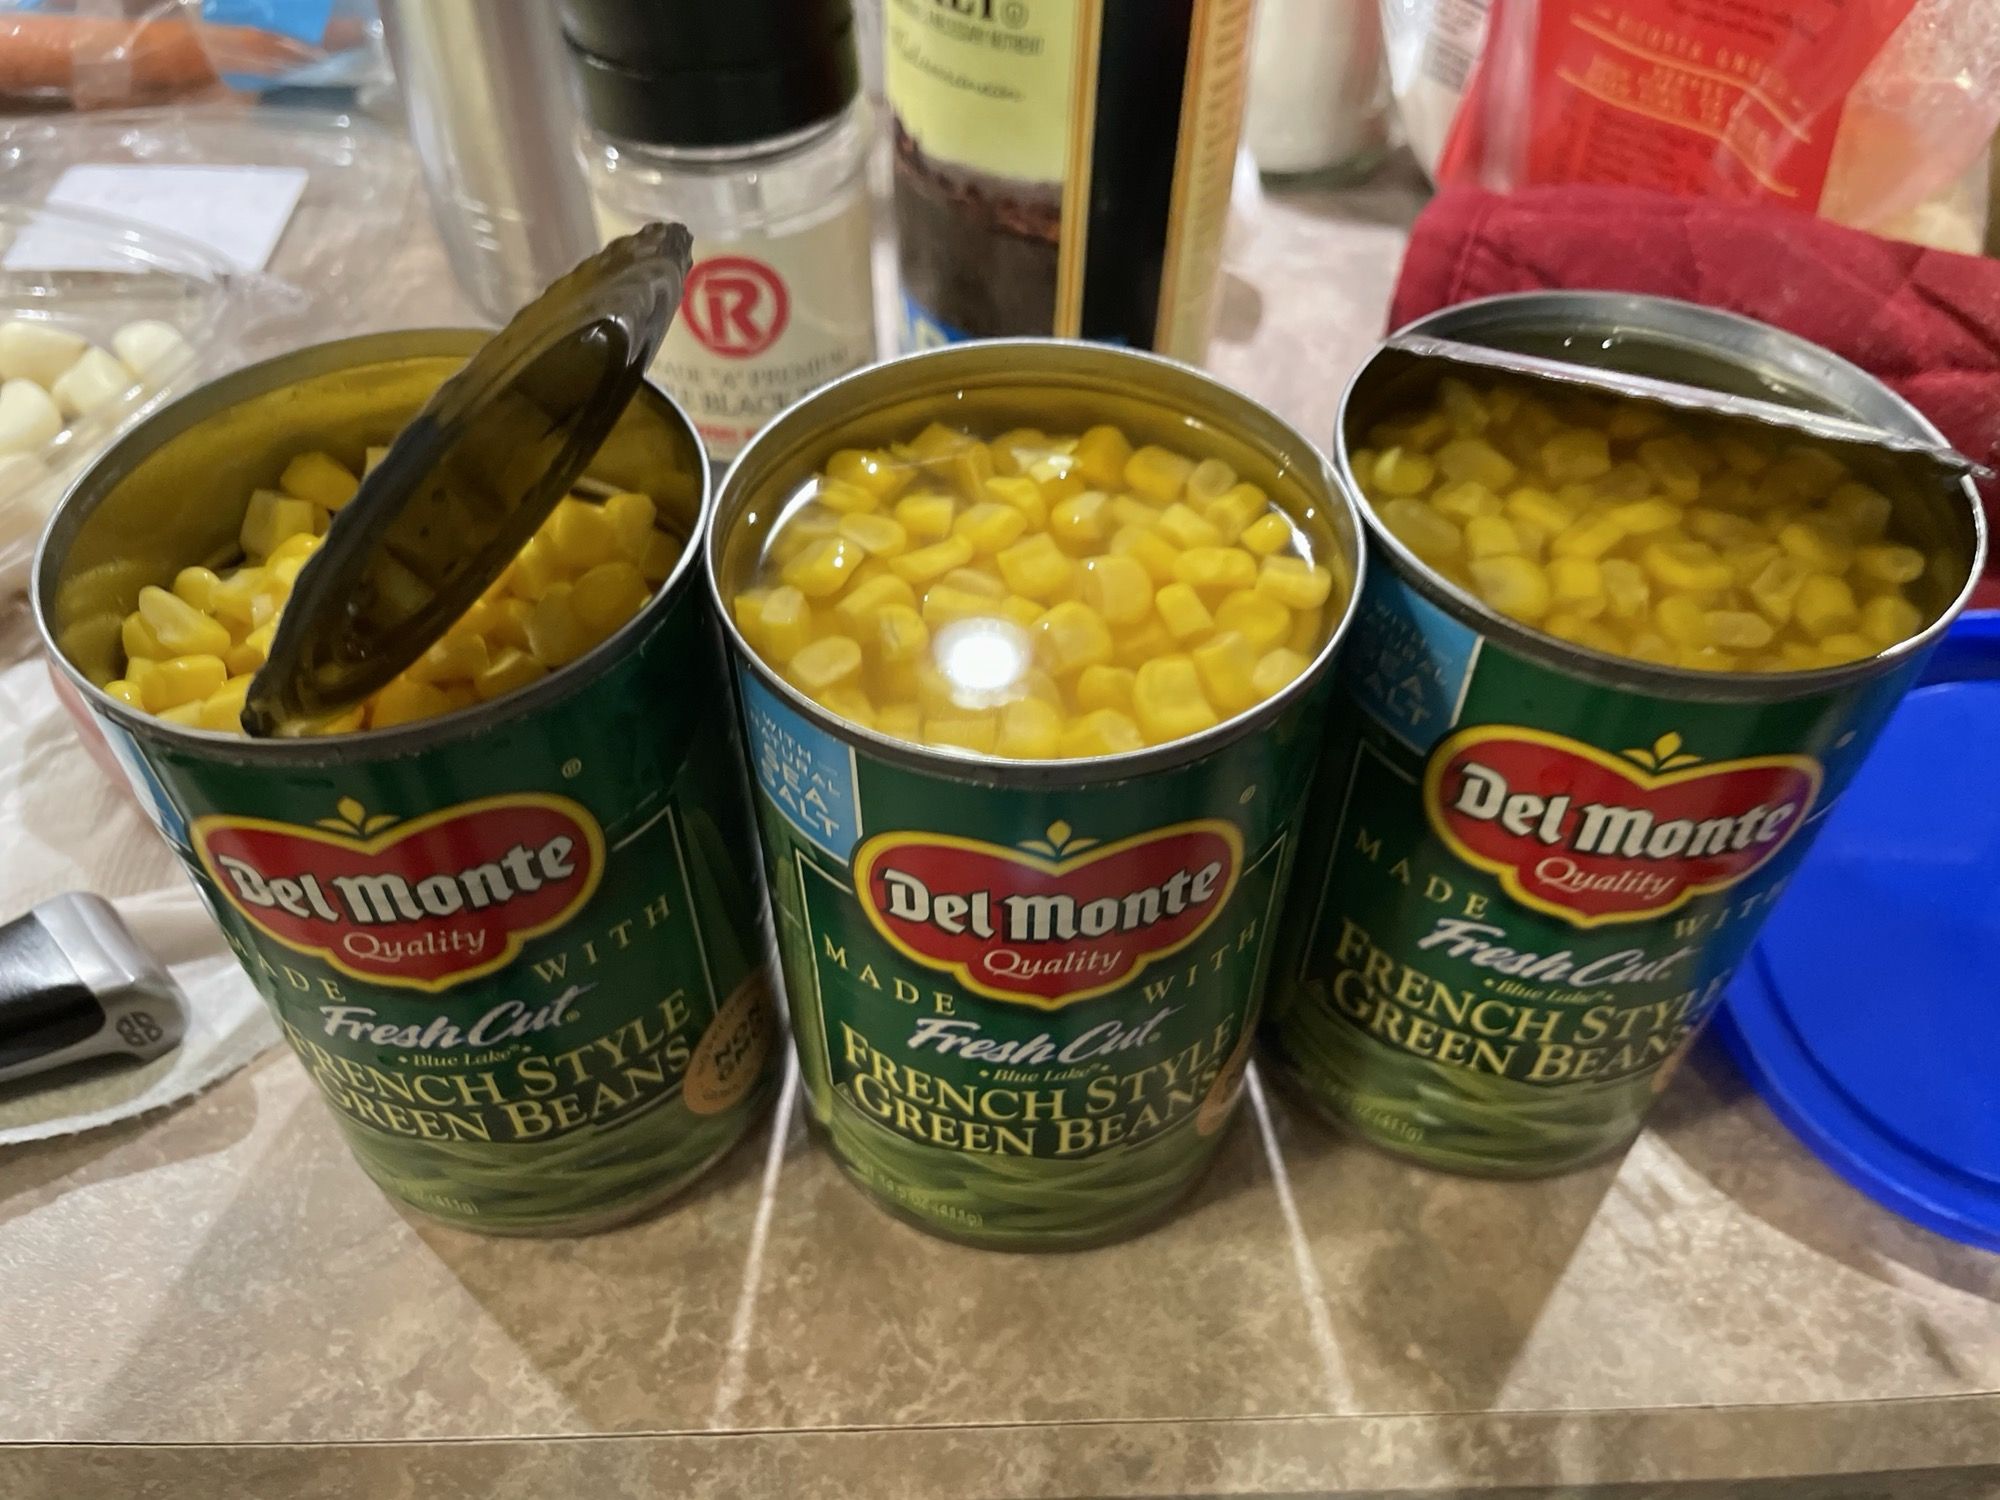 Guess I’m not having green bean casserole tomorrow....